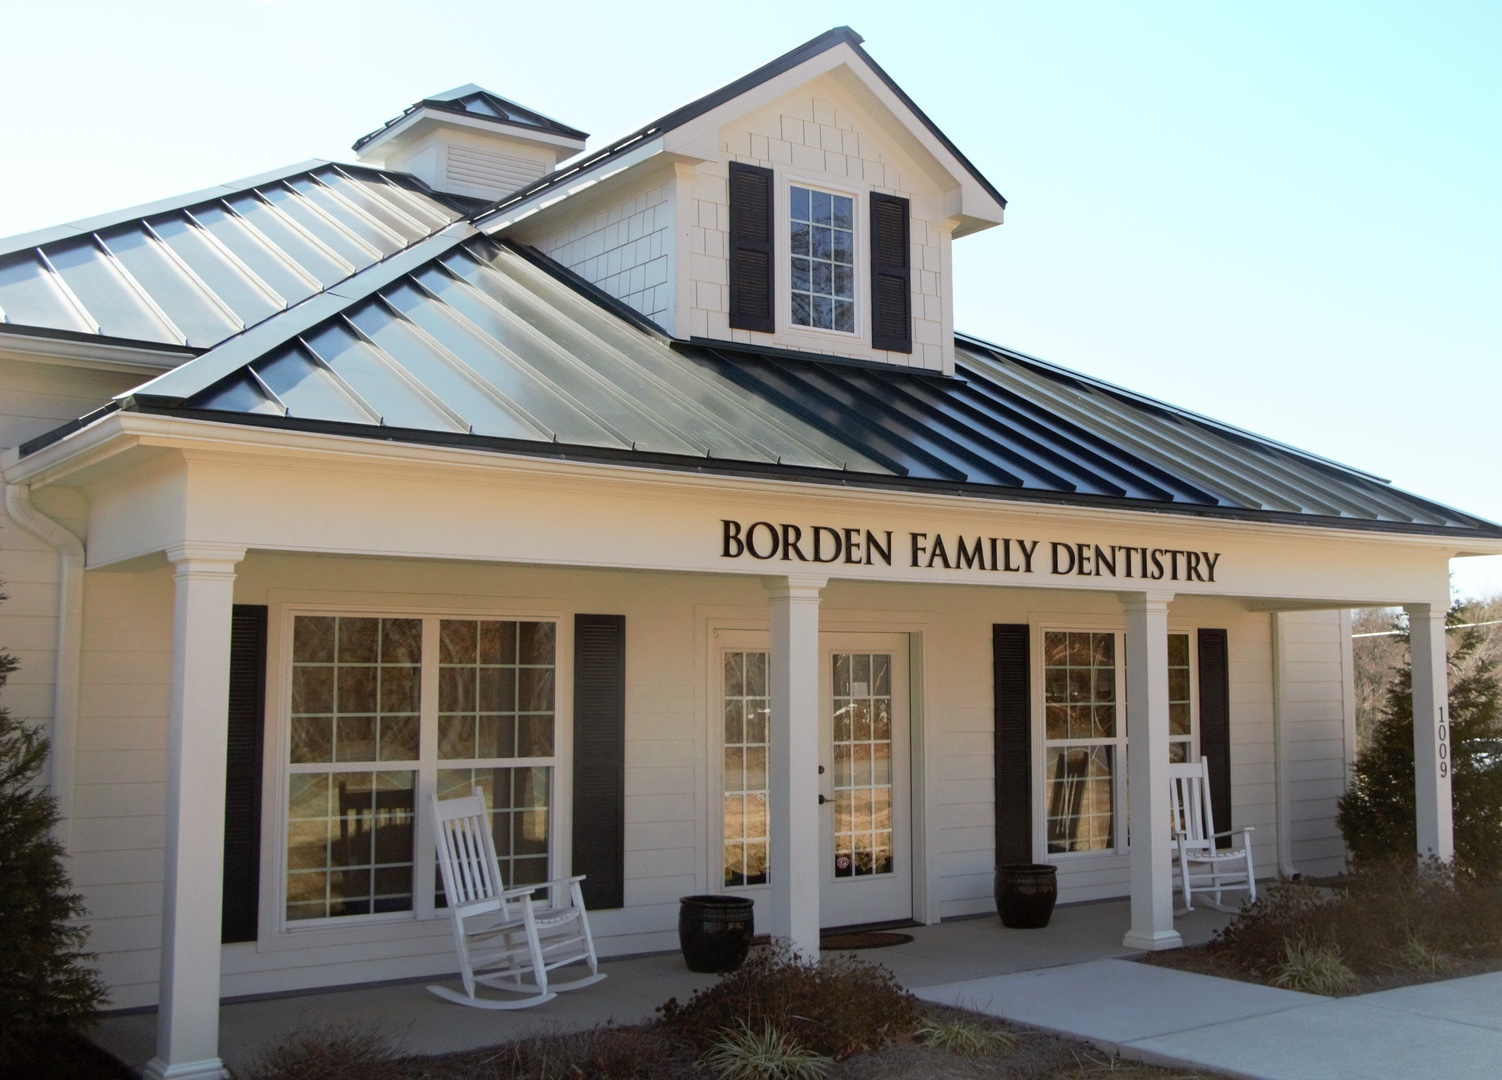 Borden Family dentistry building